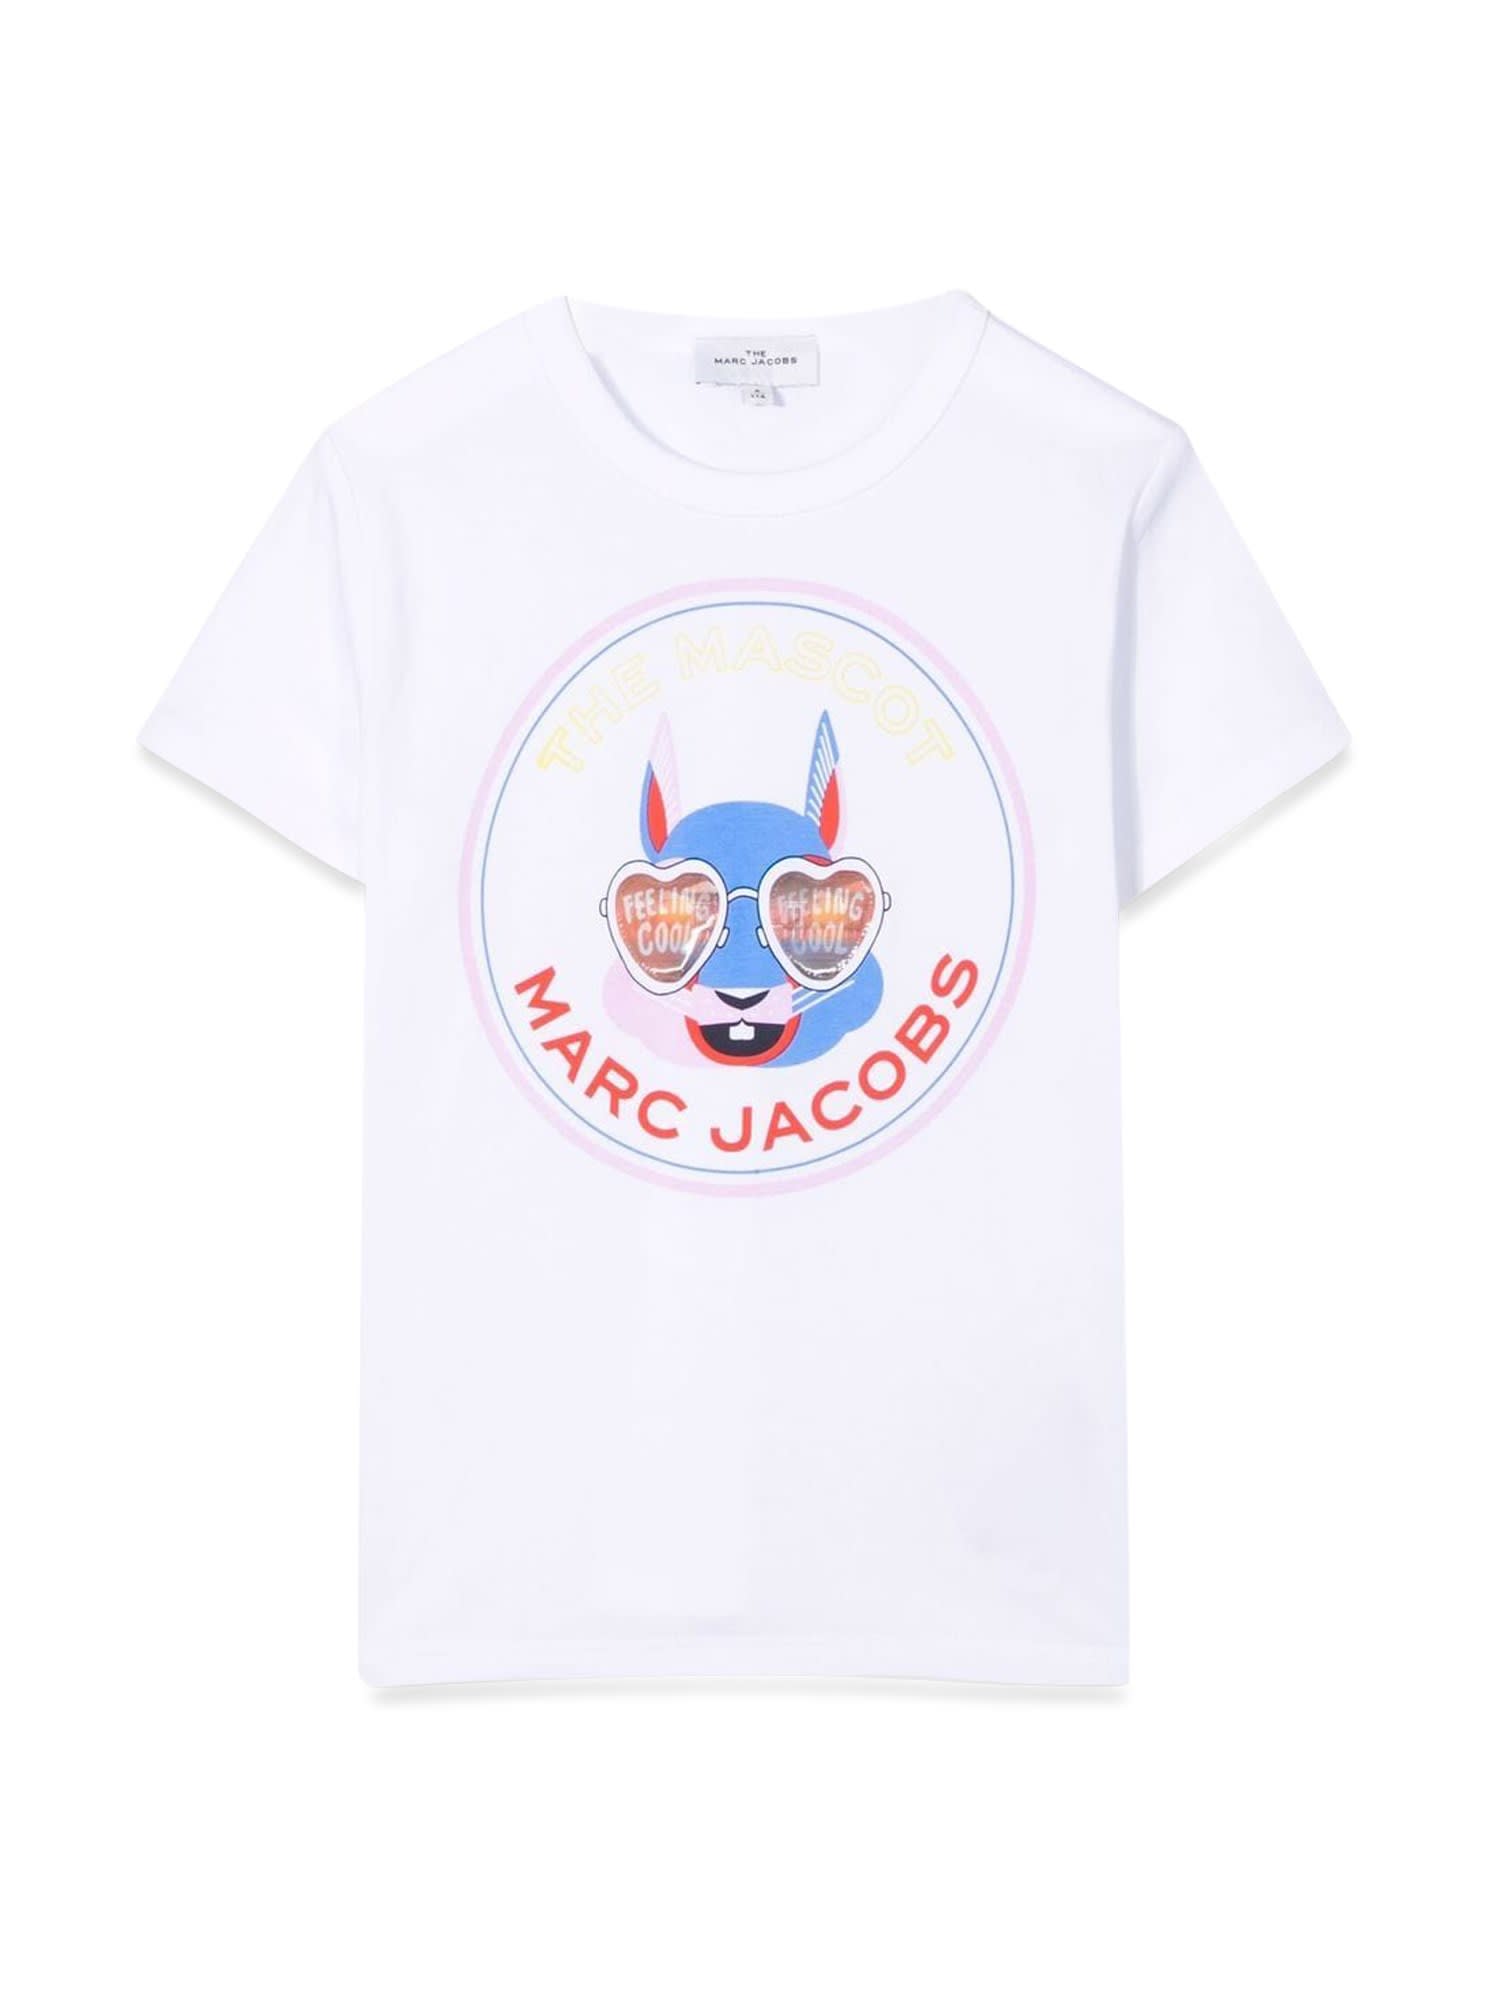 Marc Jacobs Tee Shirt